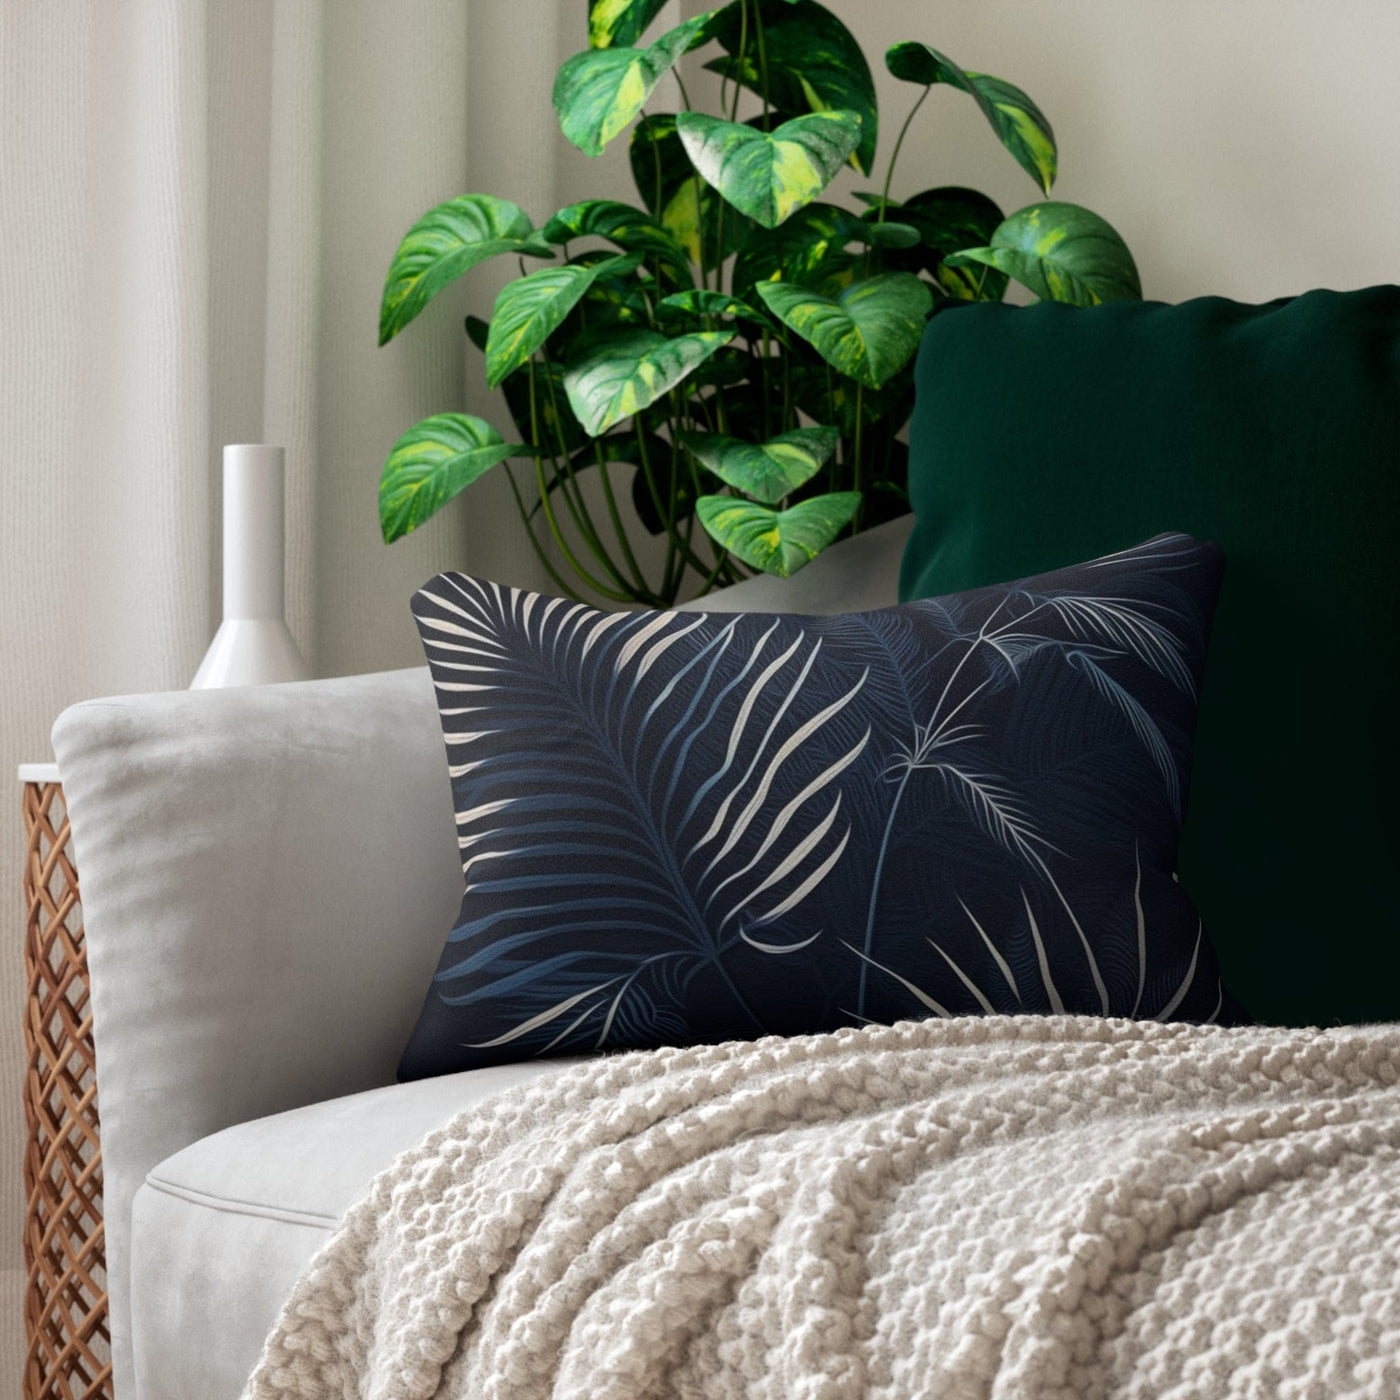 Decorative Lumbar Throw Pillow - White Line Art Palm Tree Leaves Navy Blue